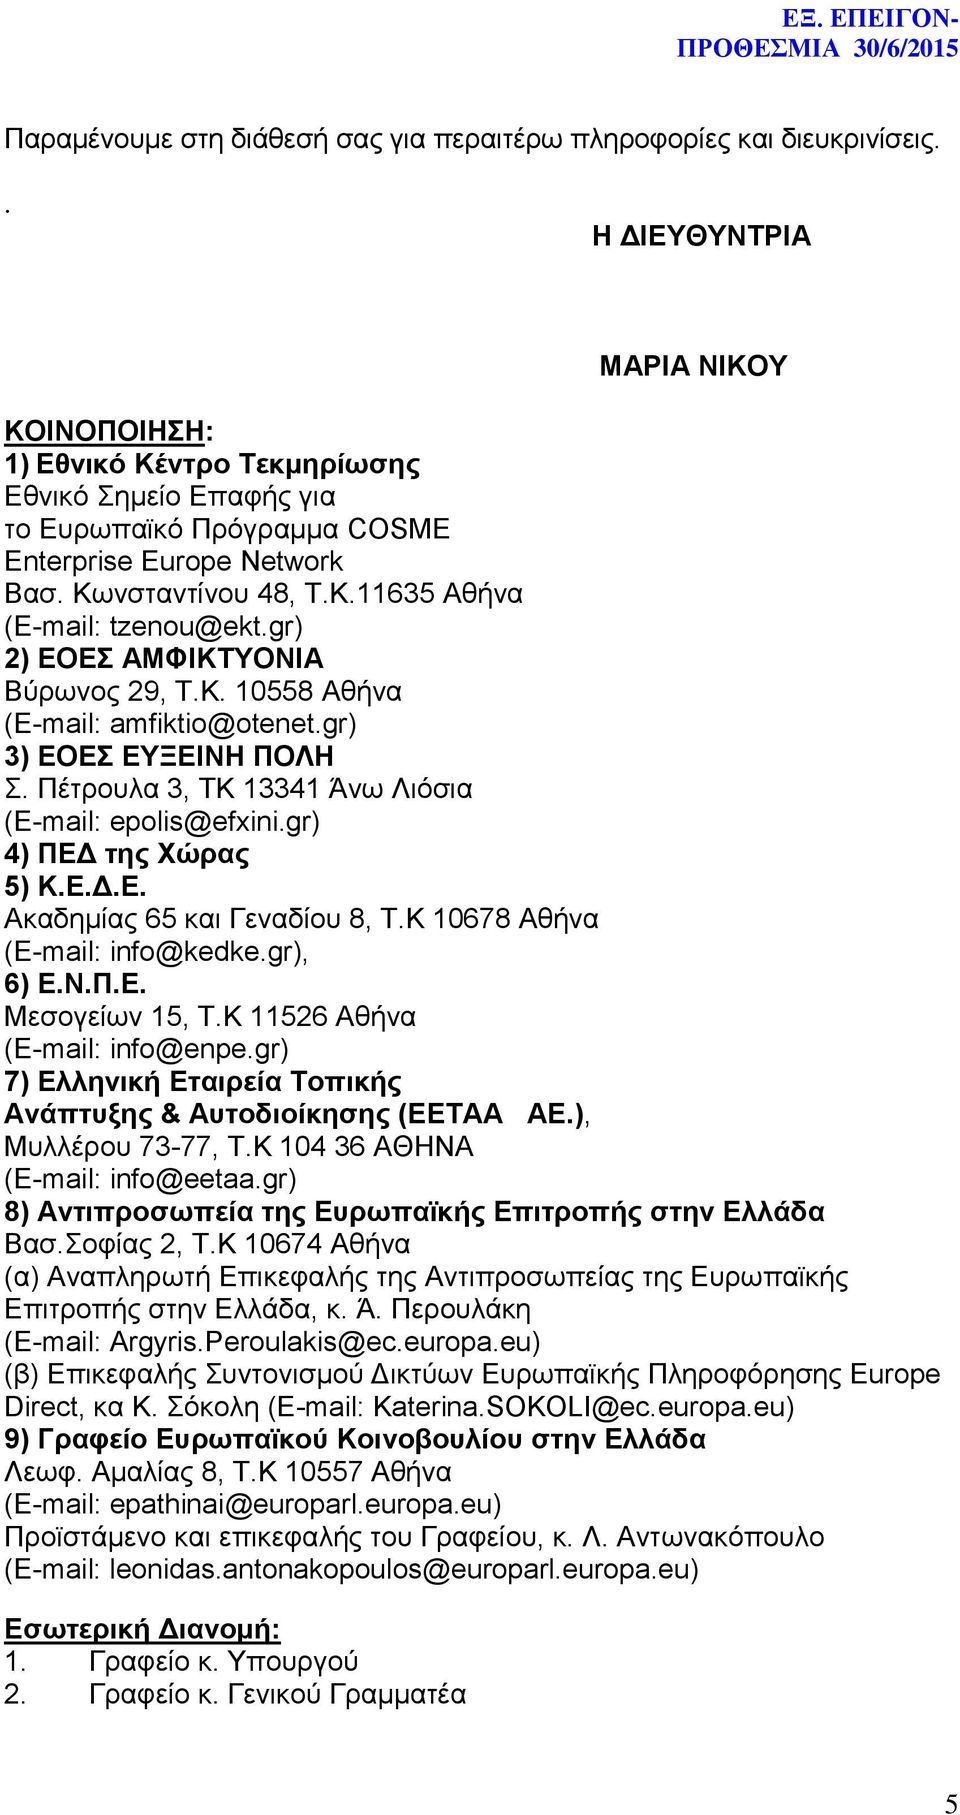 gr) 2) ΕΟΕΣ ΑΜΦΙΚΤΥΟΝΙΑ Βύρωνος 29, Τ.Κ. 10558 Αθήνα (E-mail: amfiktio@otenet.gr) 3) ΕΟΕΣ ΕΥΞΕΙΝΗ ΠΟΛΗ Σ. Πέτρουλα 3, ΤΚ 13341 Άνω Λιόσια (E-mail: epolis@efxini.gr) 4) ΠΕΔ της Χώρας 5) Κ.Ε.Δ.Ε. Ακαδημίας 65 και Γεναδίου 8, Τ.